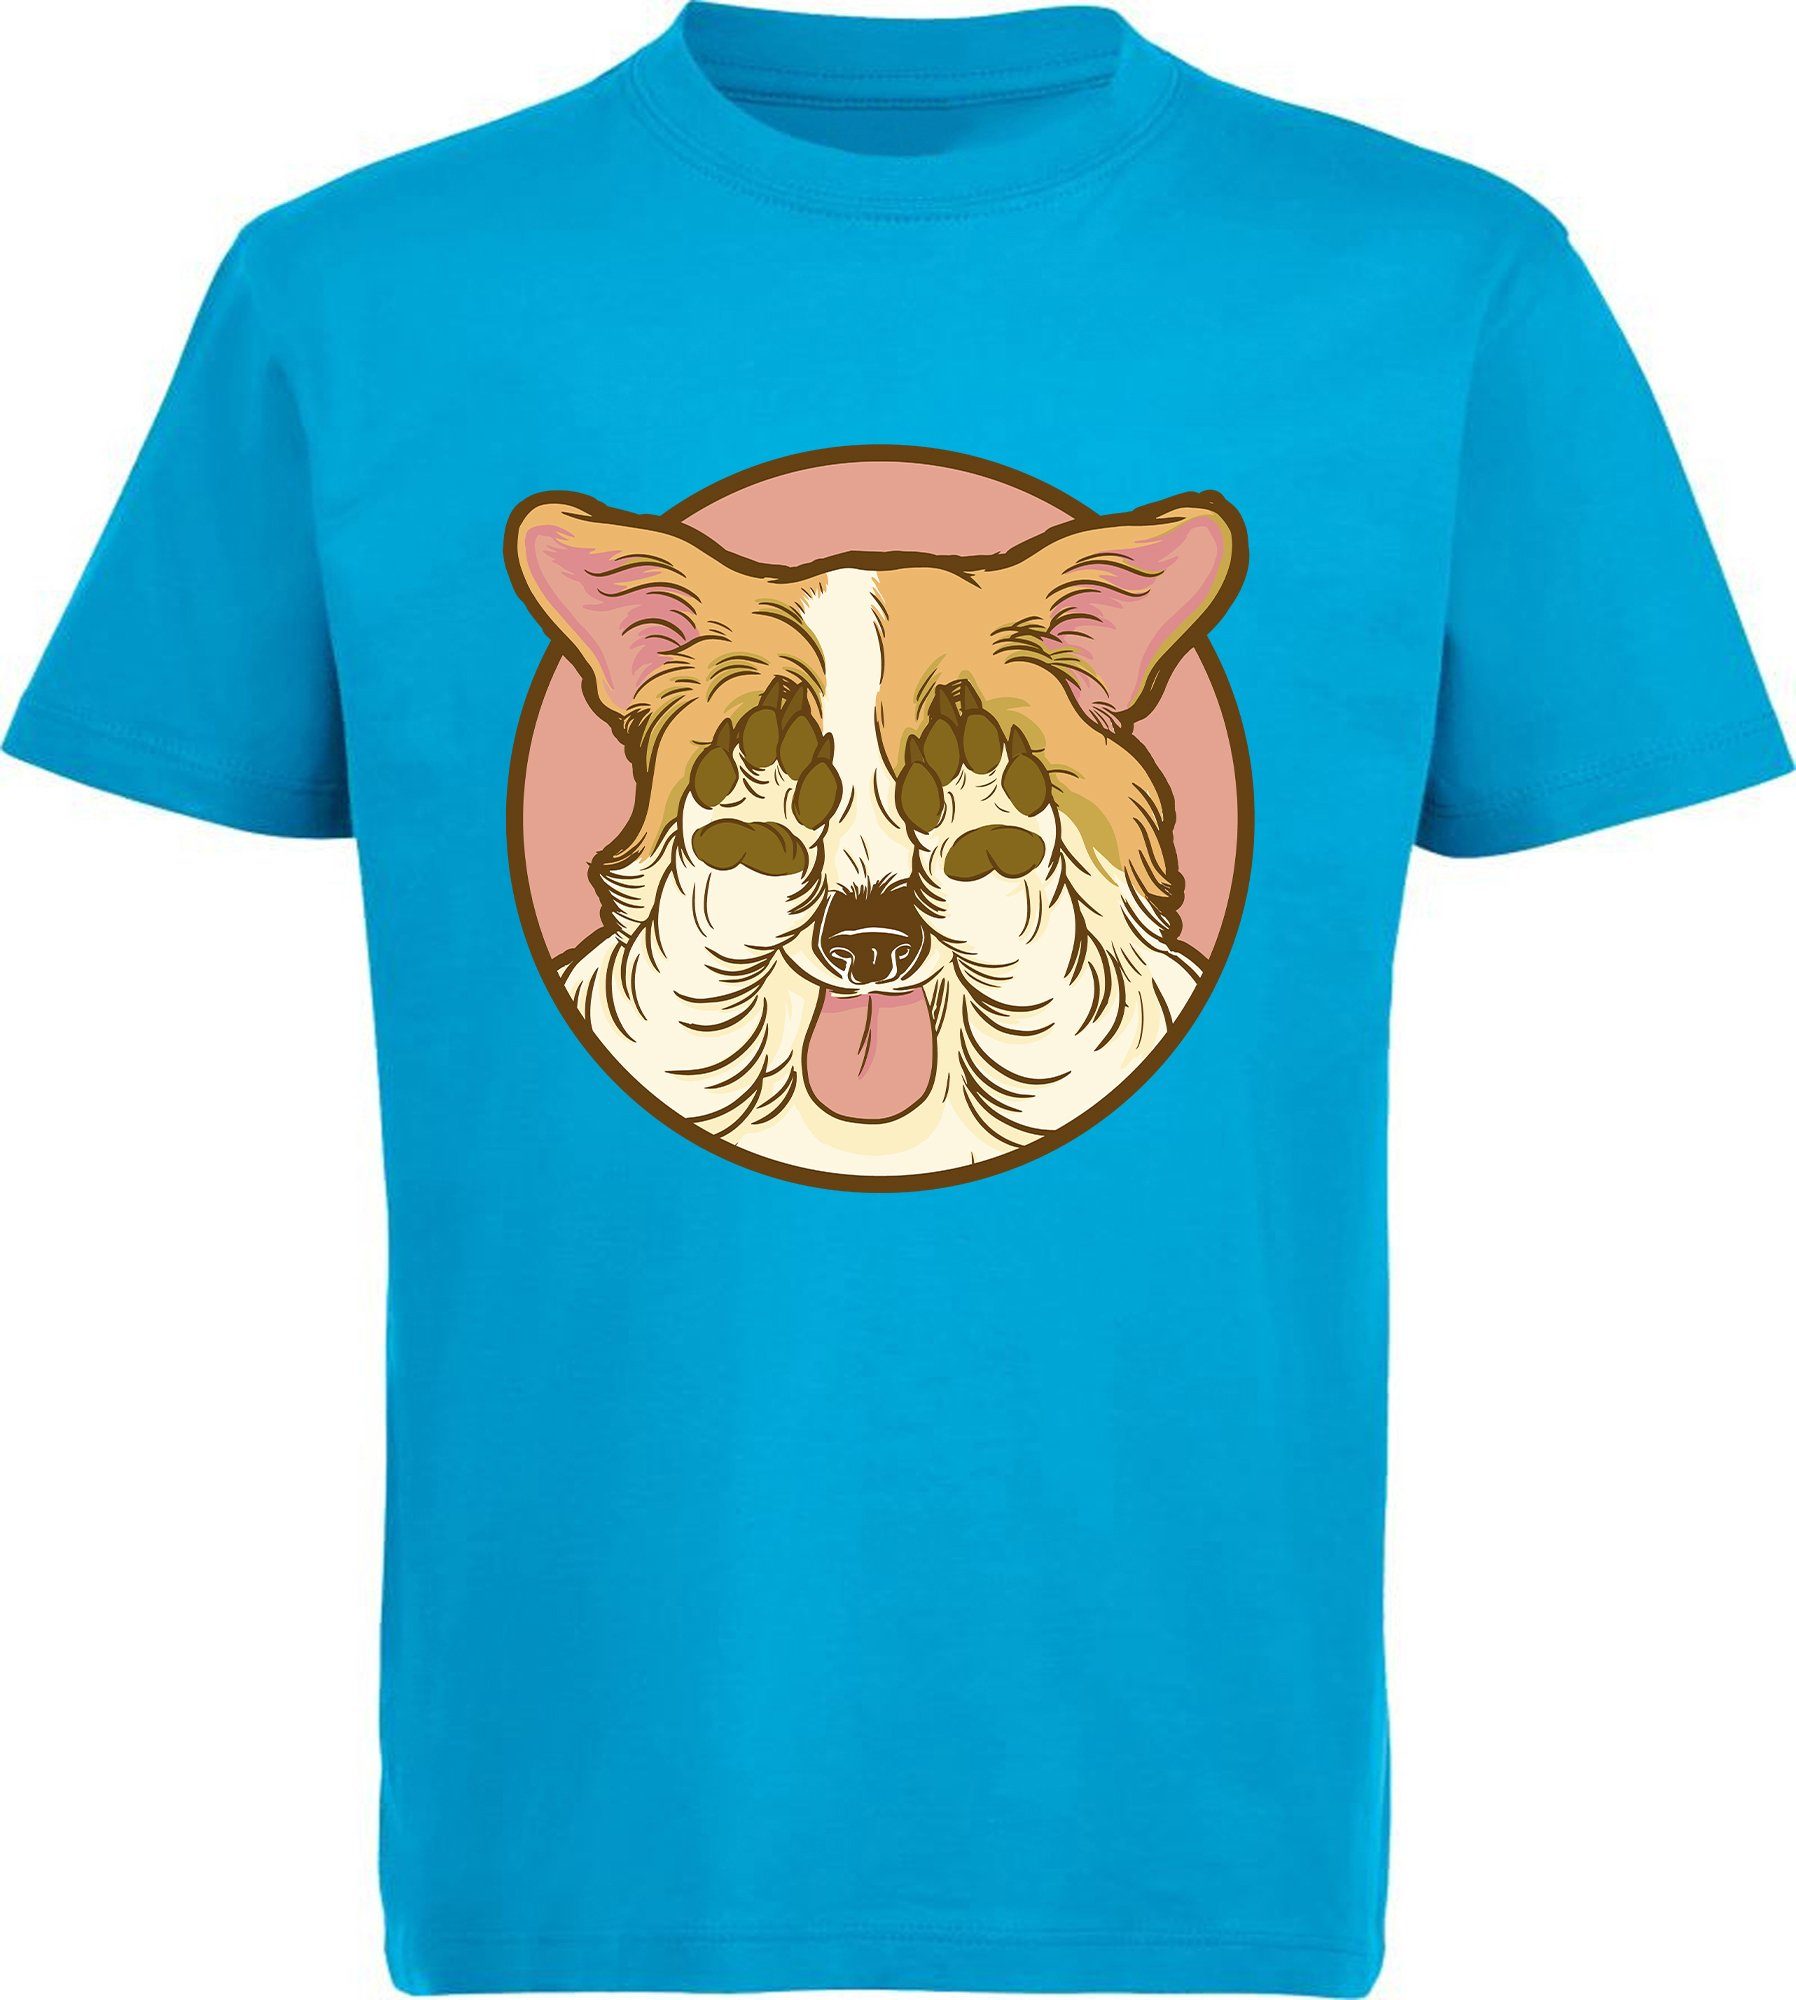 MyDesign24 Print-Shirt bedrucktes Kinder Hunde T-Shirt - Corgi der seine Augen zu hält Baumwollshirt mit Aufdruck, i226 aqua blau